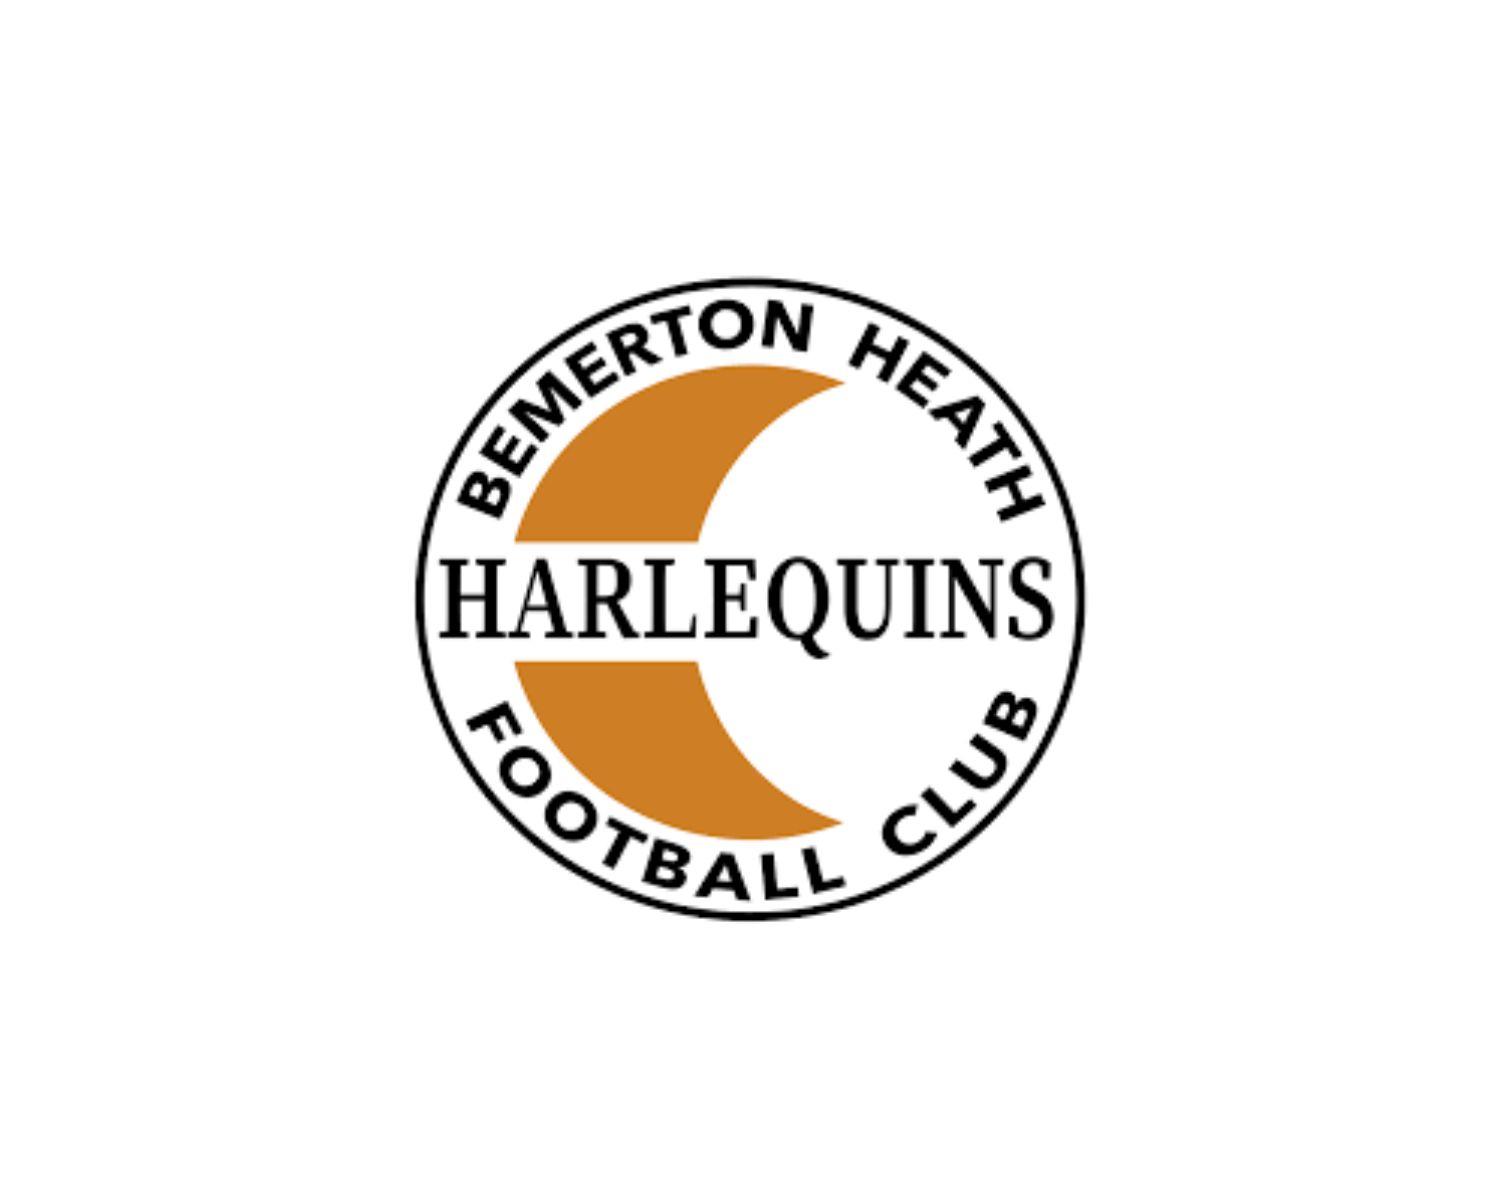 bemerton-heath-harlequins-fc-22-football-club-facts